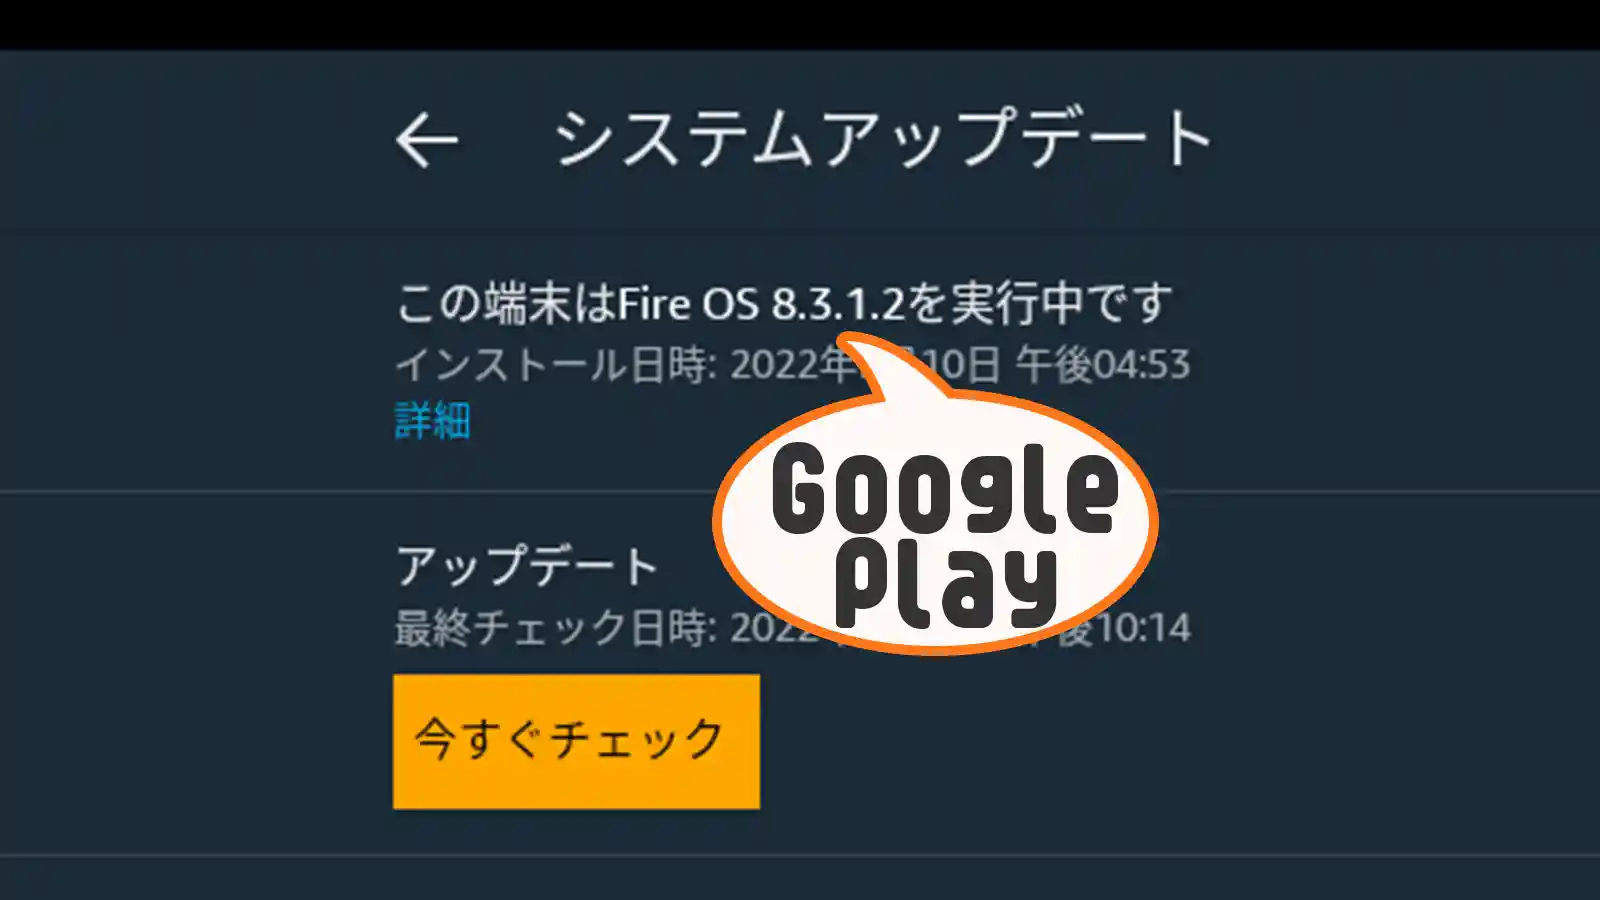 Amazon Fireタブレット FireOS8.3.1.2 GooglePlay